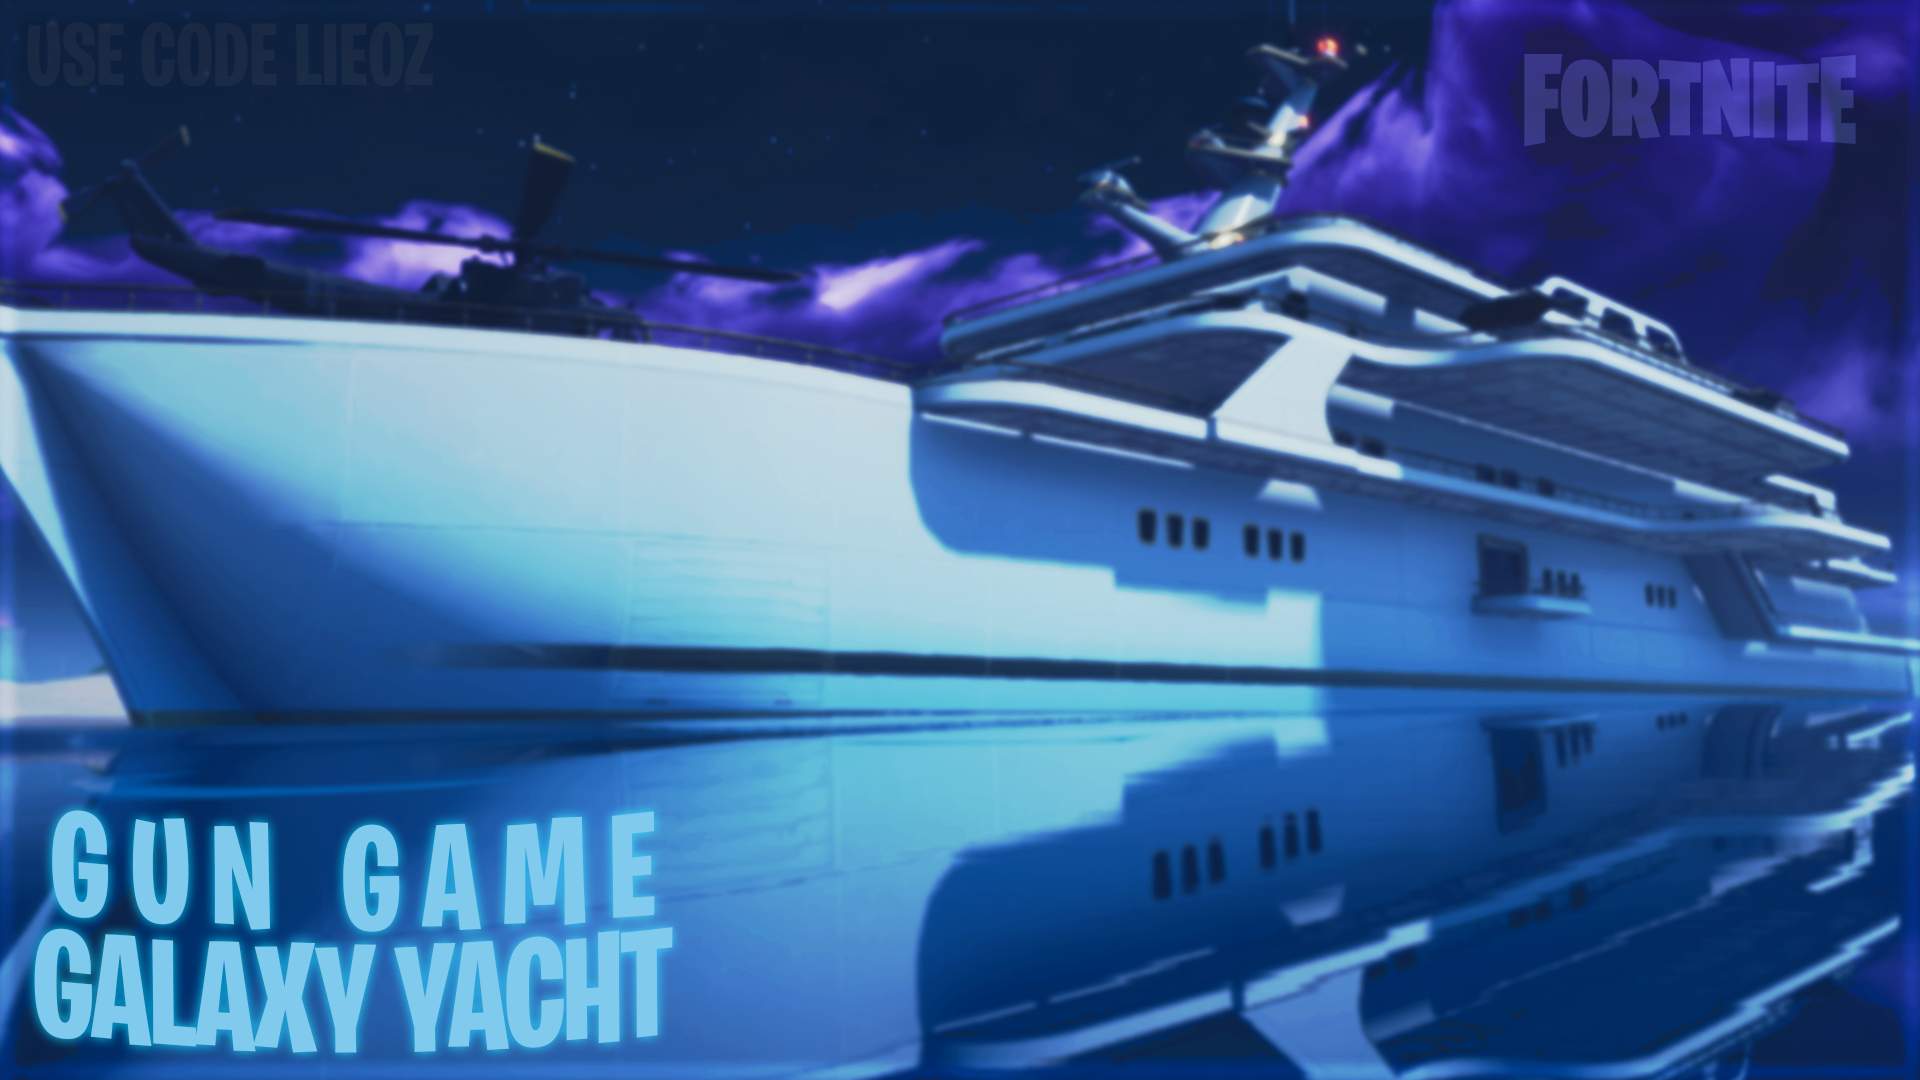 Gun Game Galaxy Yacht Fortnite Creative Map Codes Dropnite Com